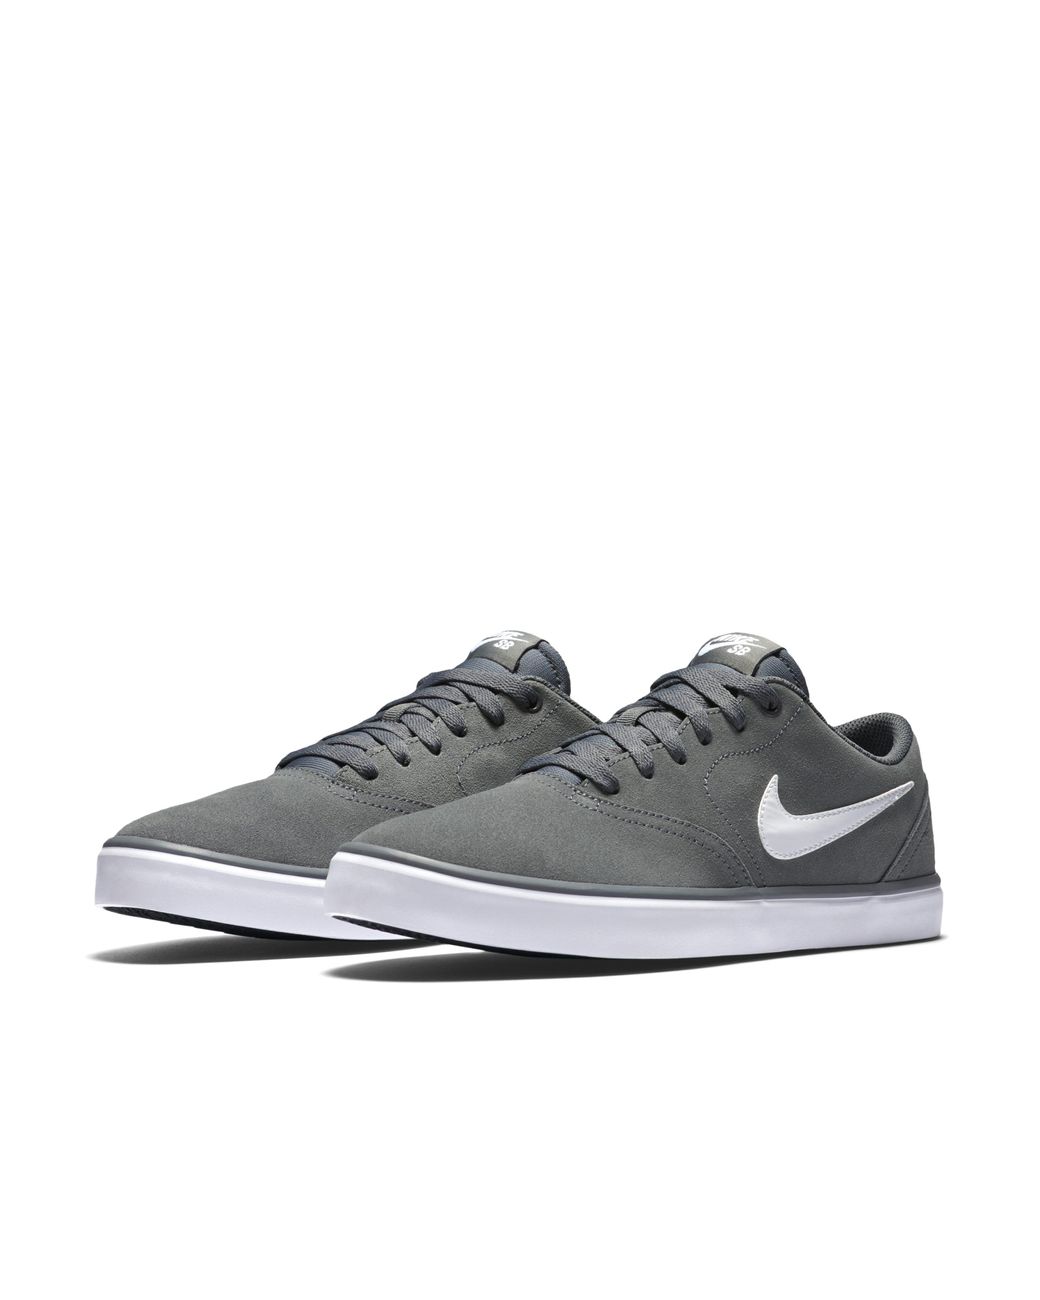 Nike Sb Check Solarsoft Skateboarding Shoe in Grey | Lyst UK